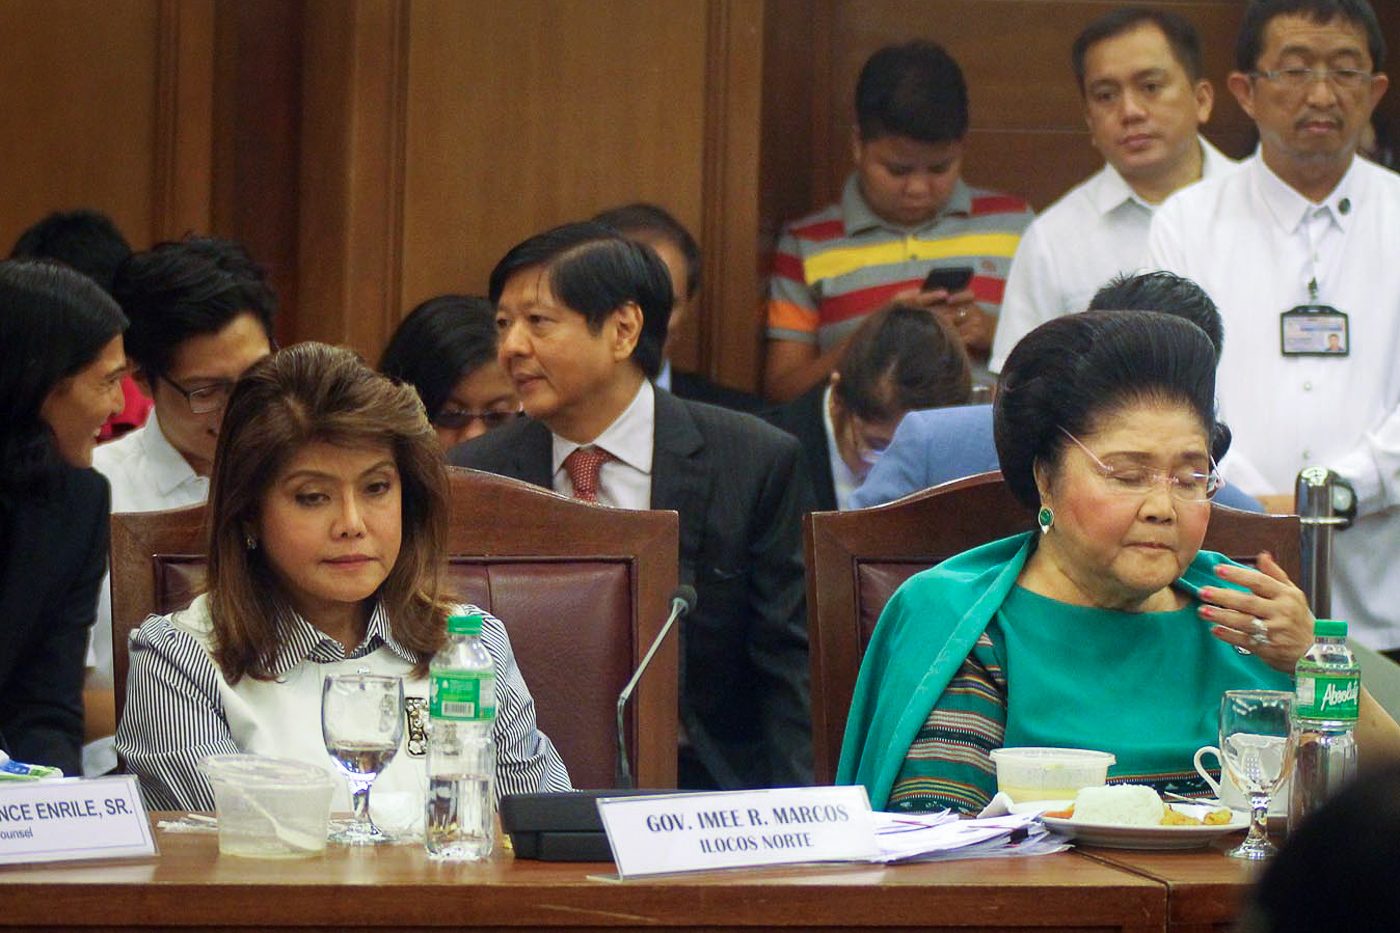 Senators to Marcoses: Return all ill-gotten wealth, not just ‘crumbs’